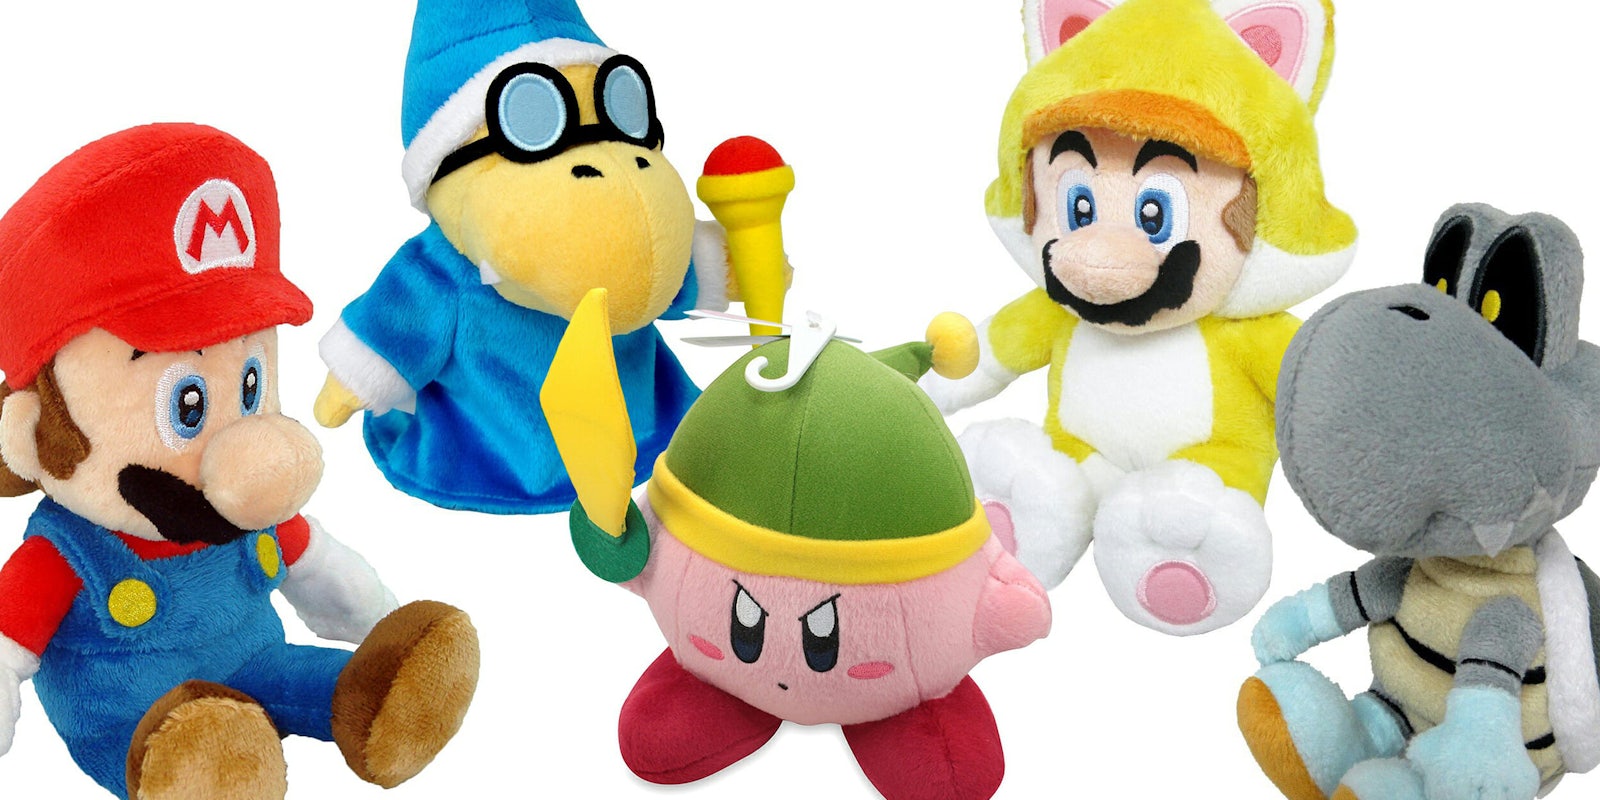 Nintendo character plush dolls